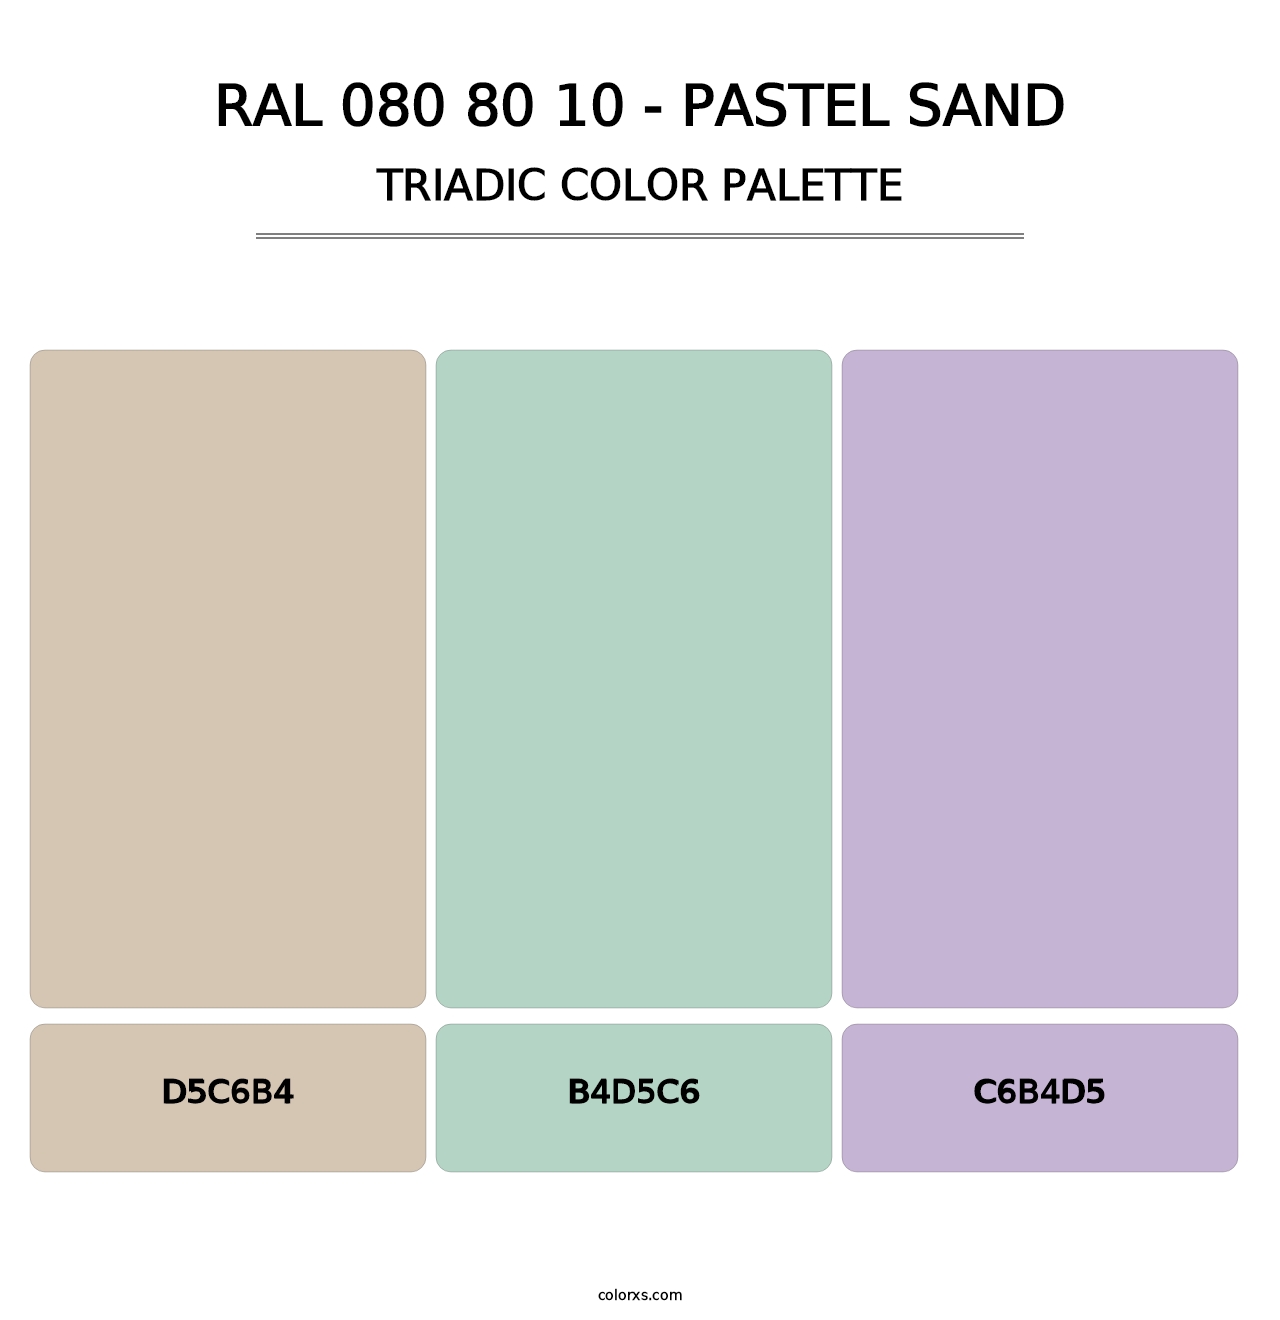 RAL 080 80 10 - Pastel Sand - Triadic Color Palette